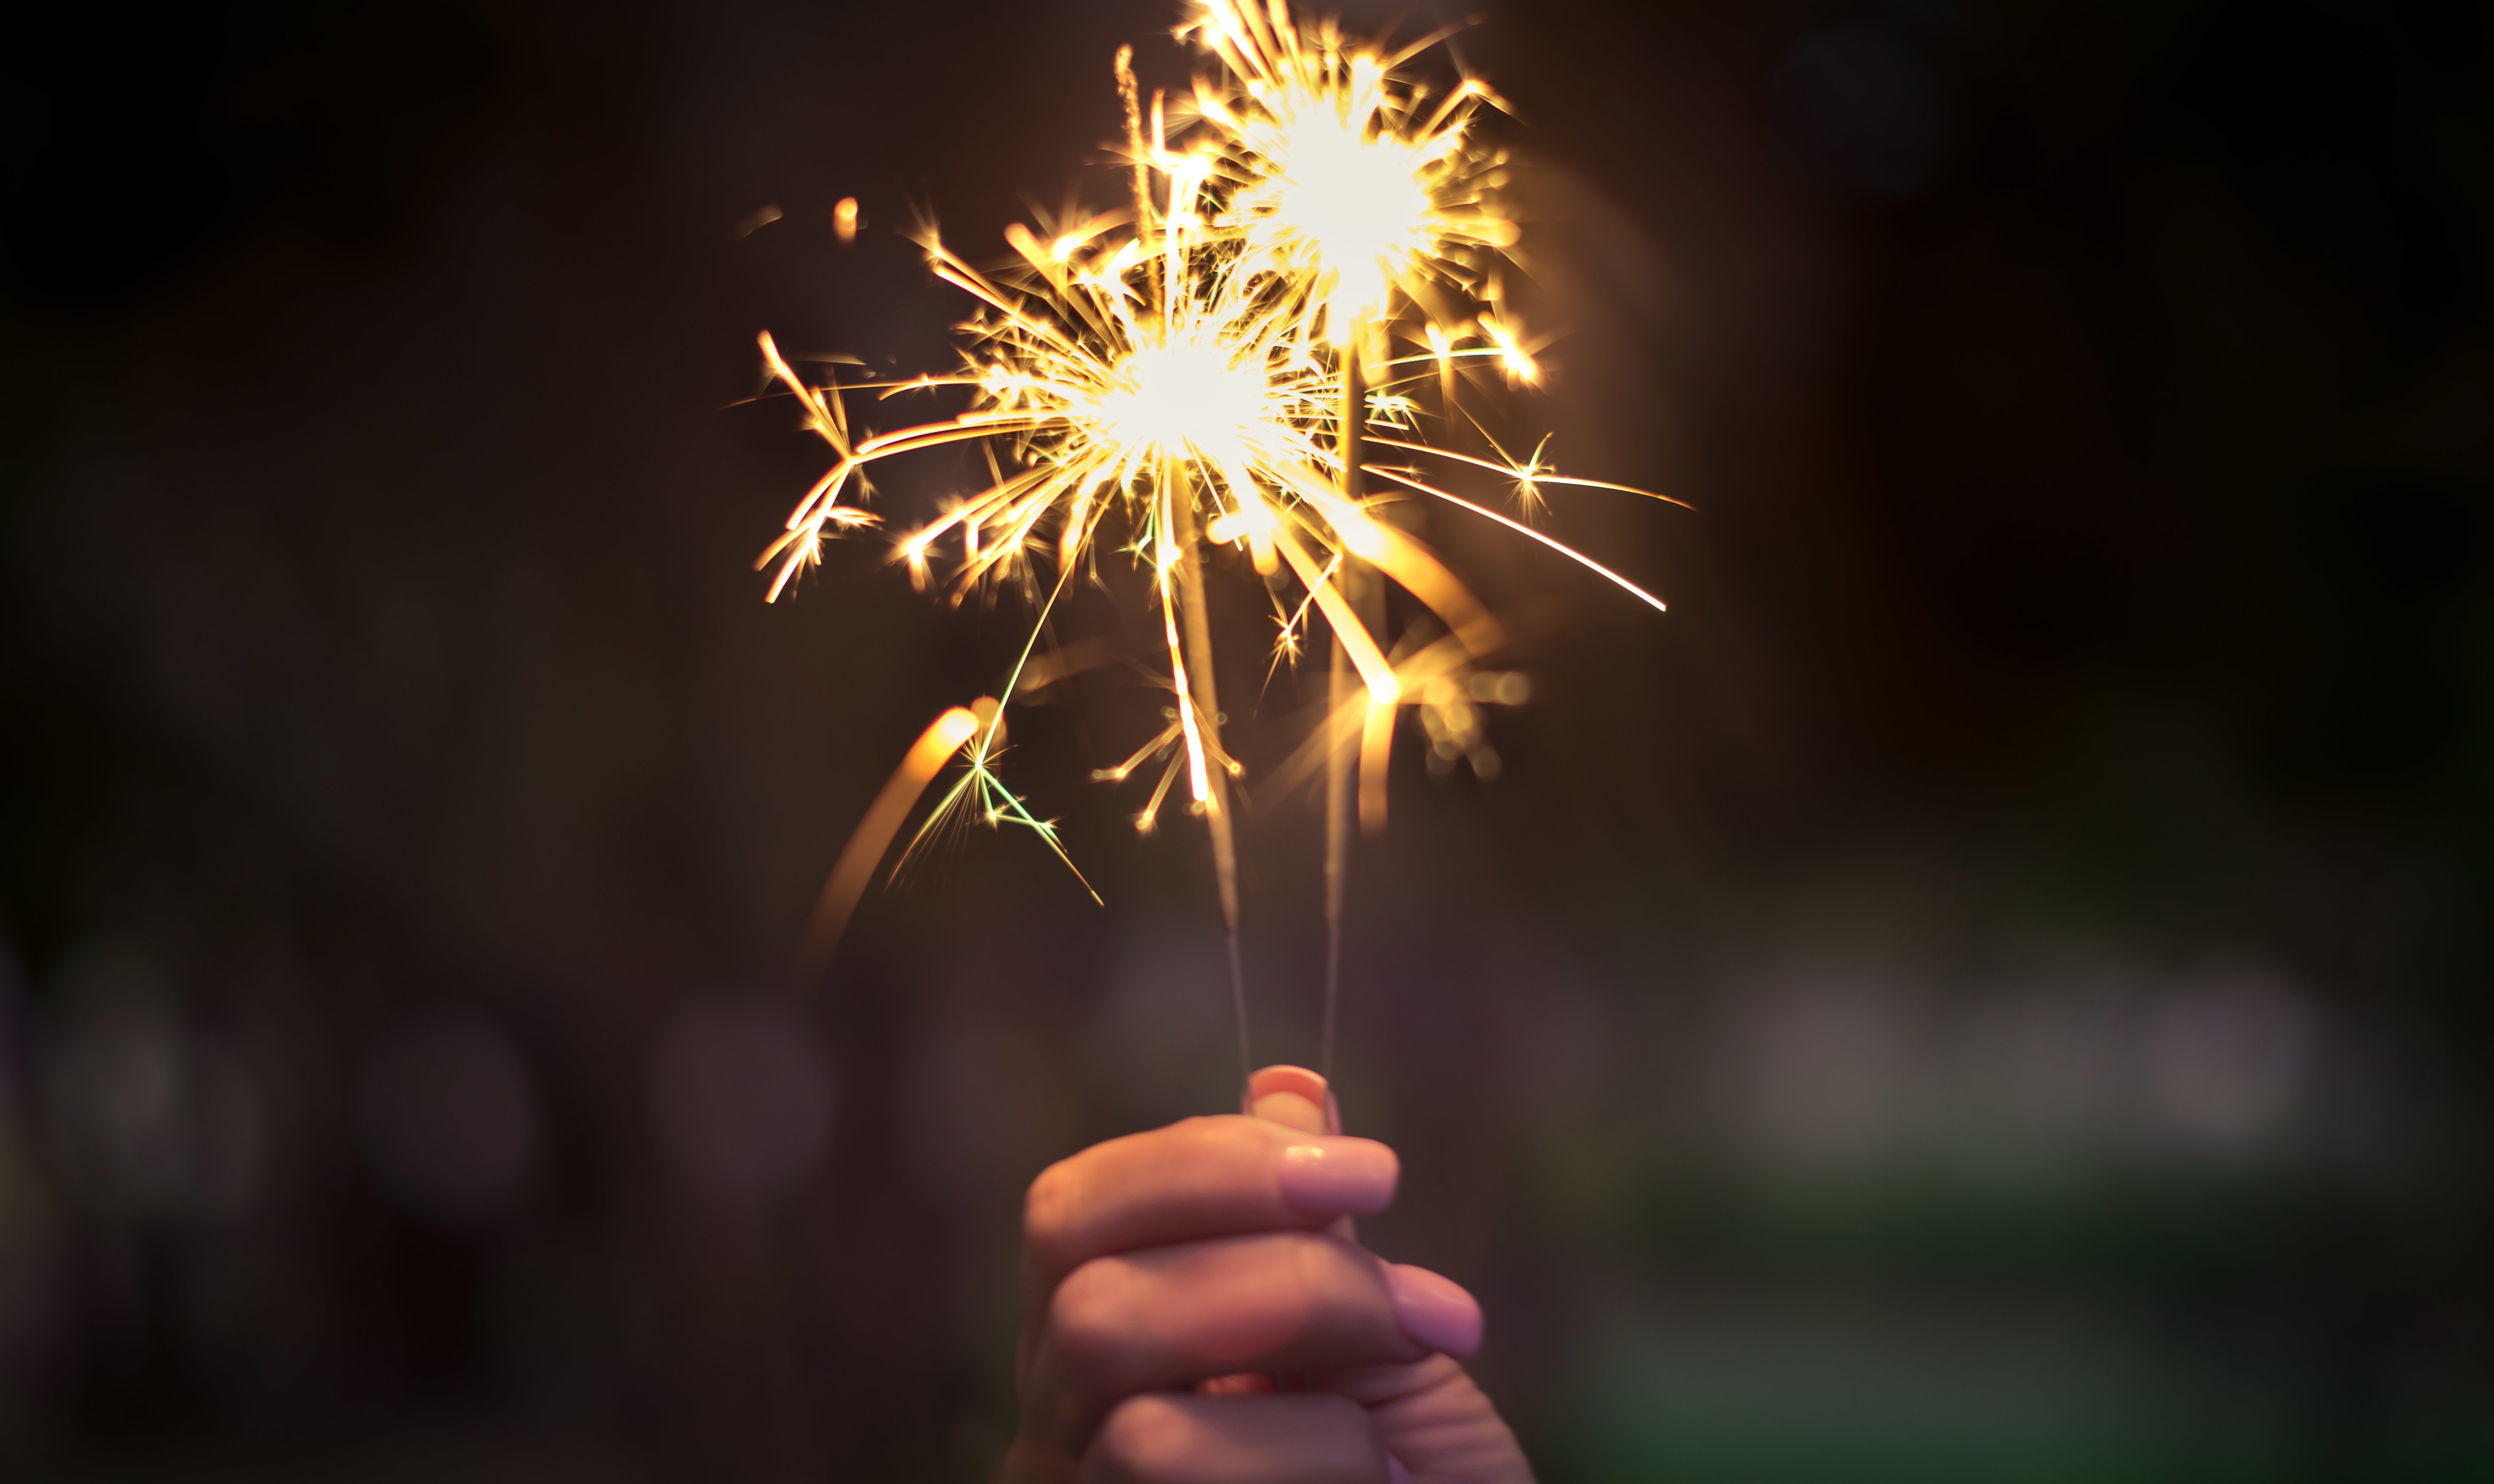 100+ Great Fireworks Photos · Pexels · Free Stock Photos